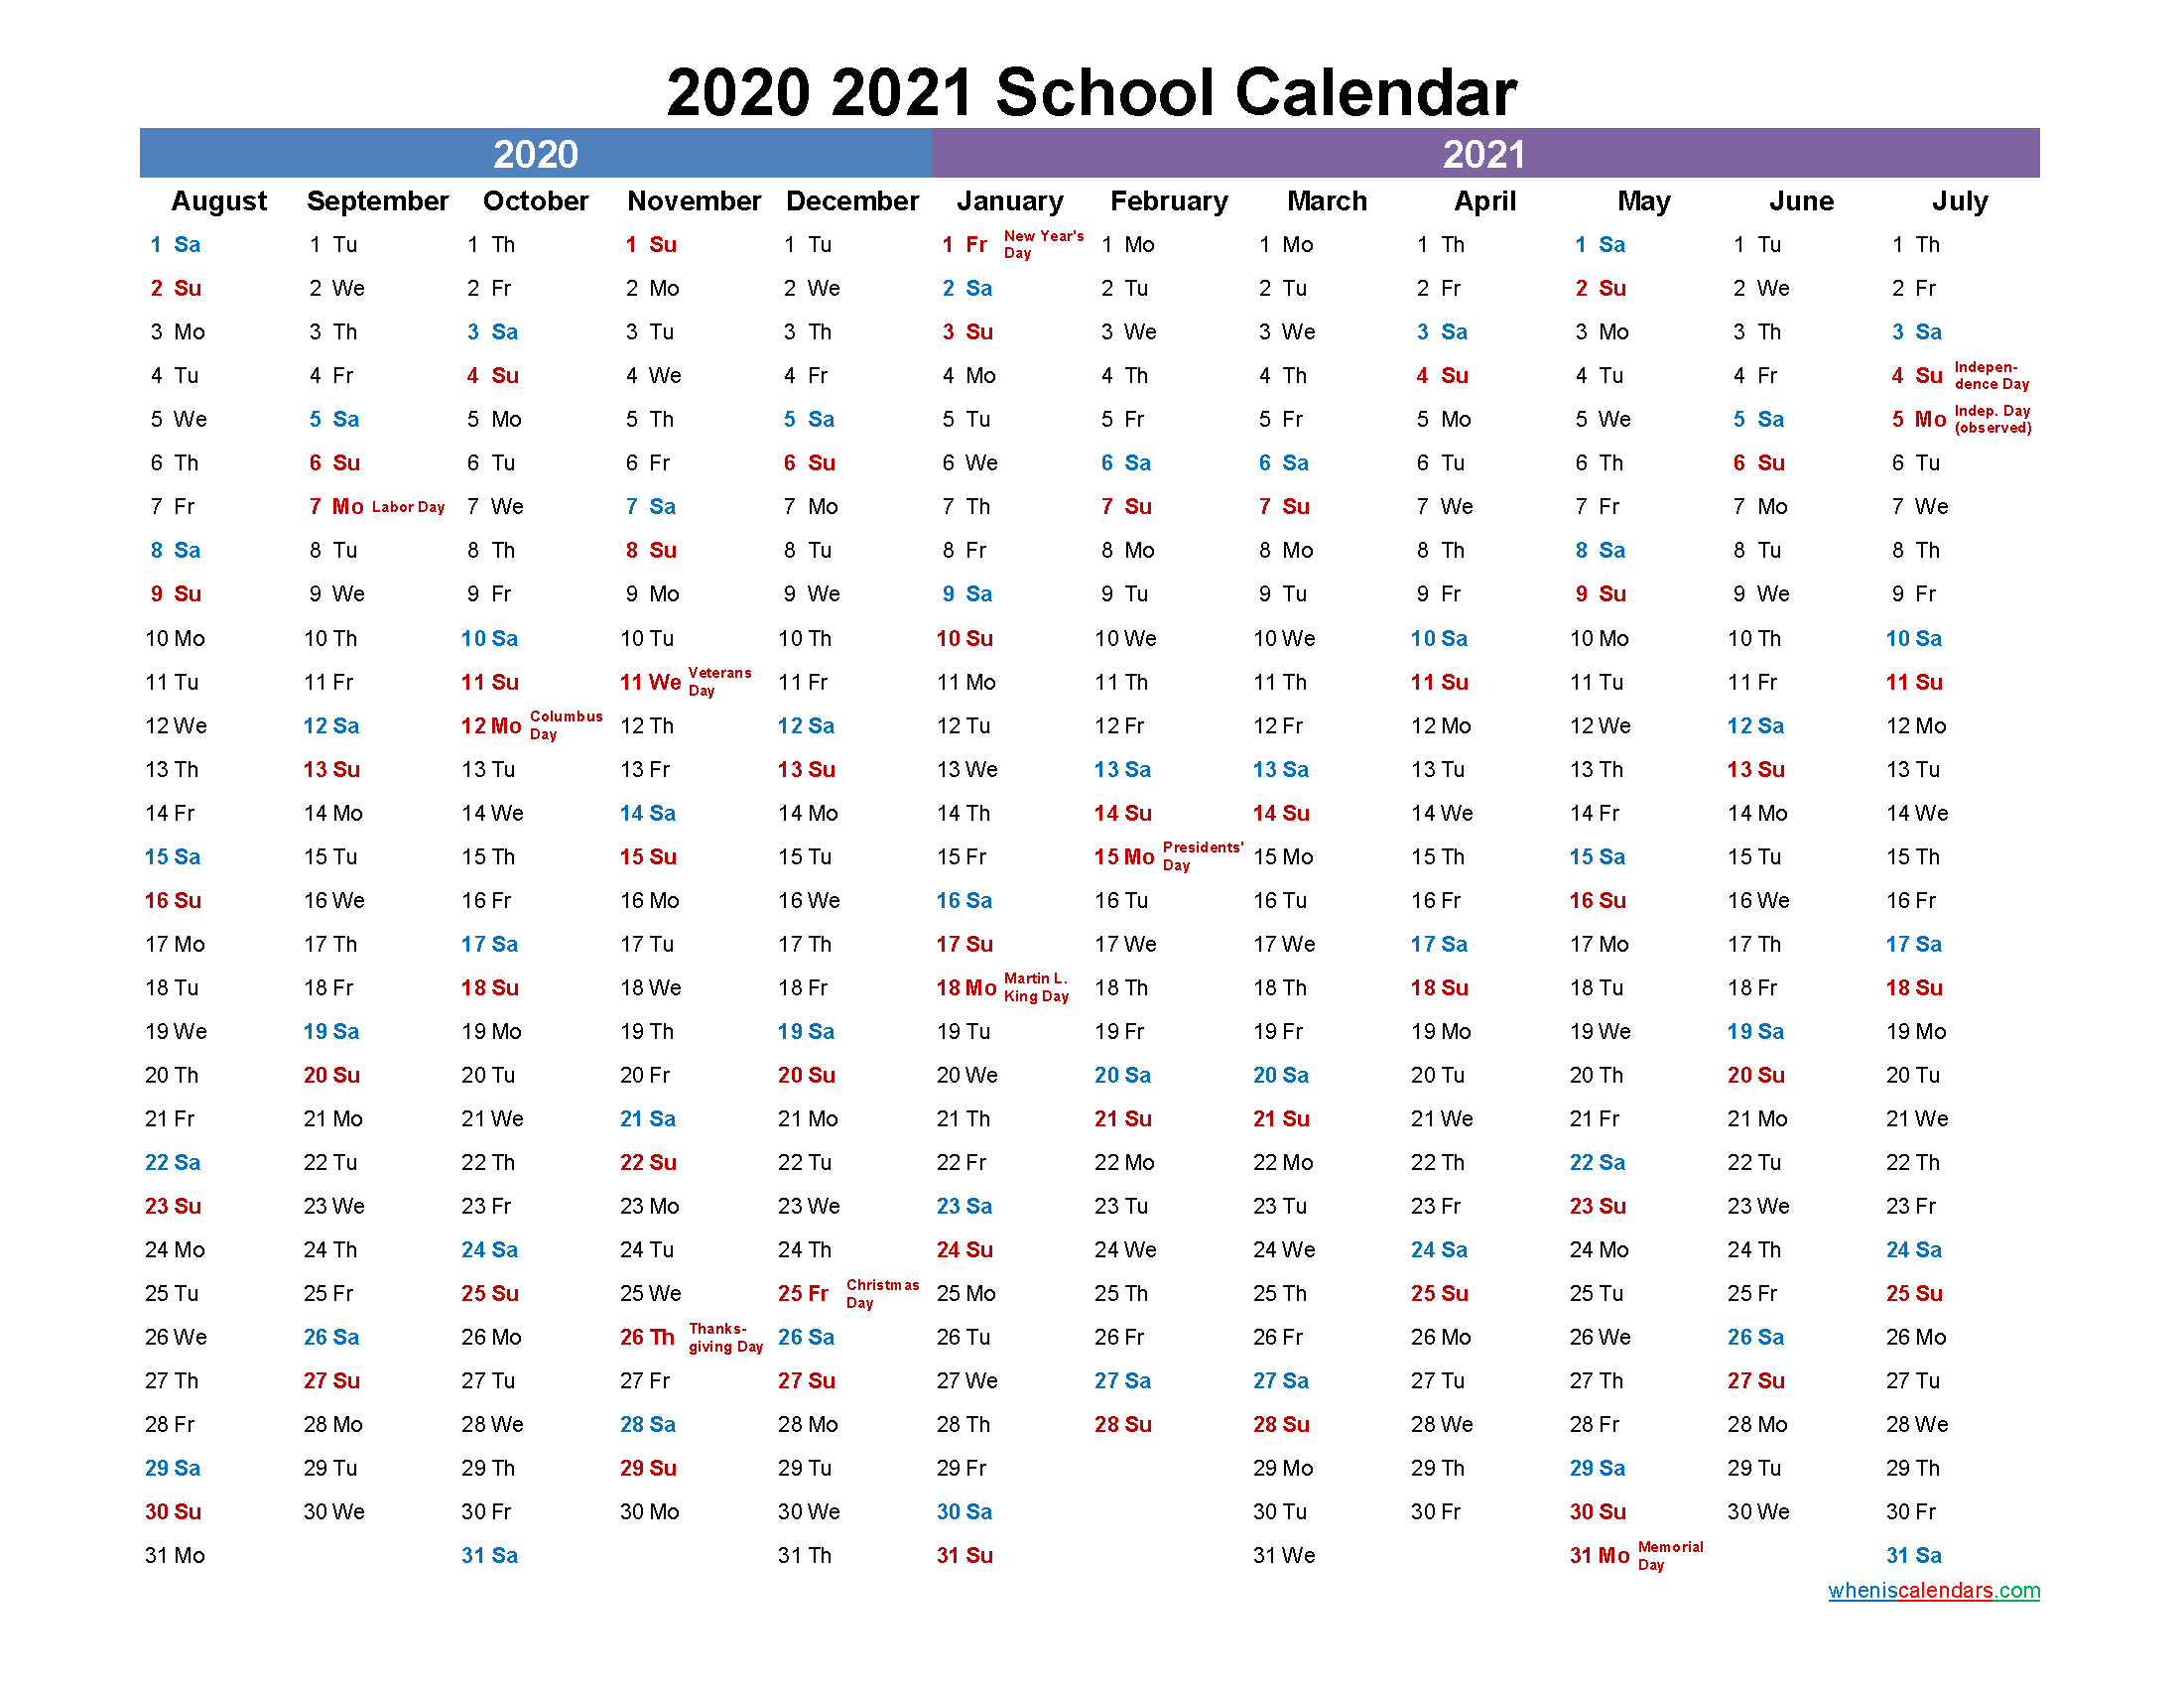 2020 and 2021 School Calendar Printable - Template No.21scl23